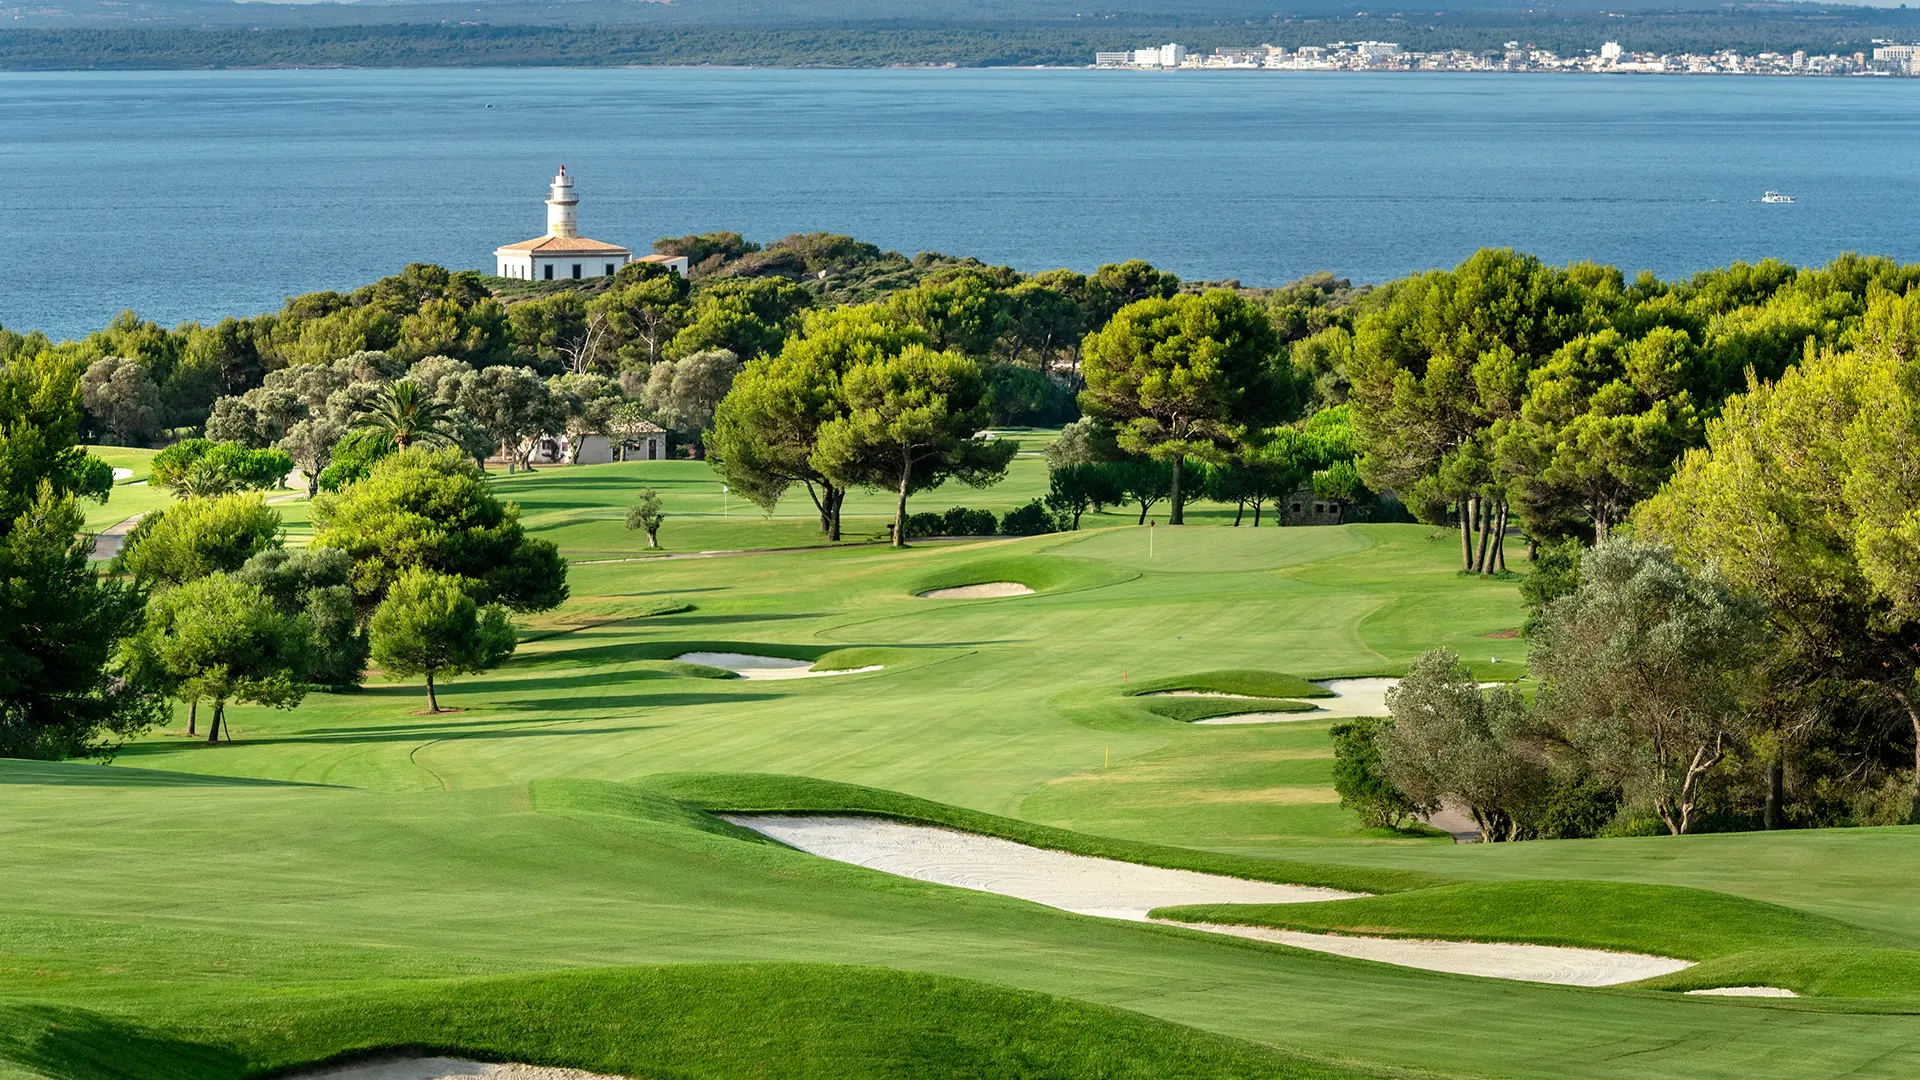 Spain golf holidays - Fuerte Marbella - Spain - Photo 1